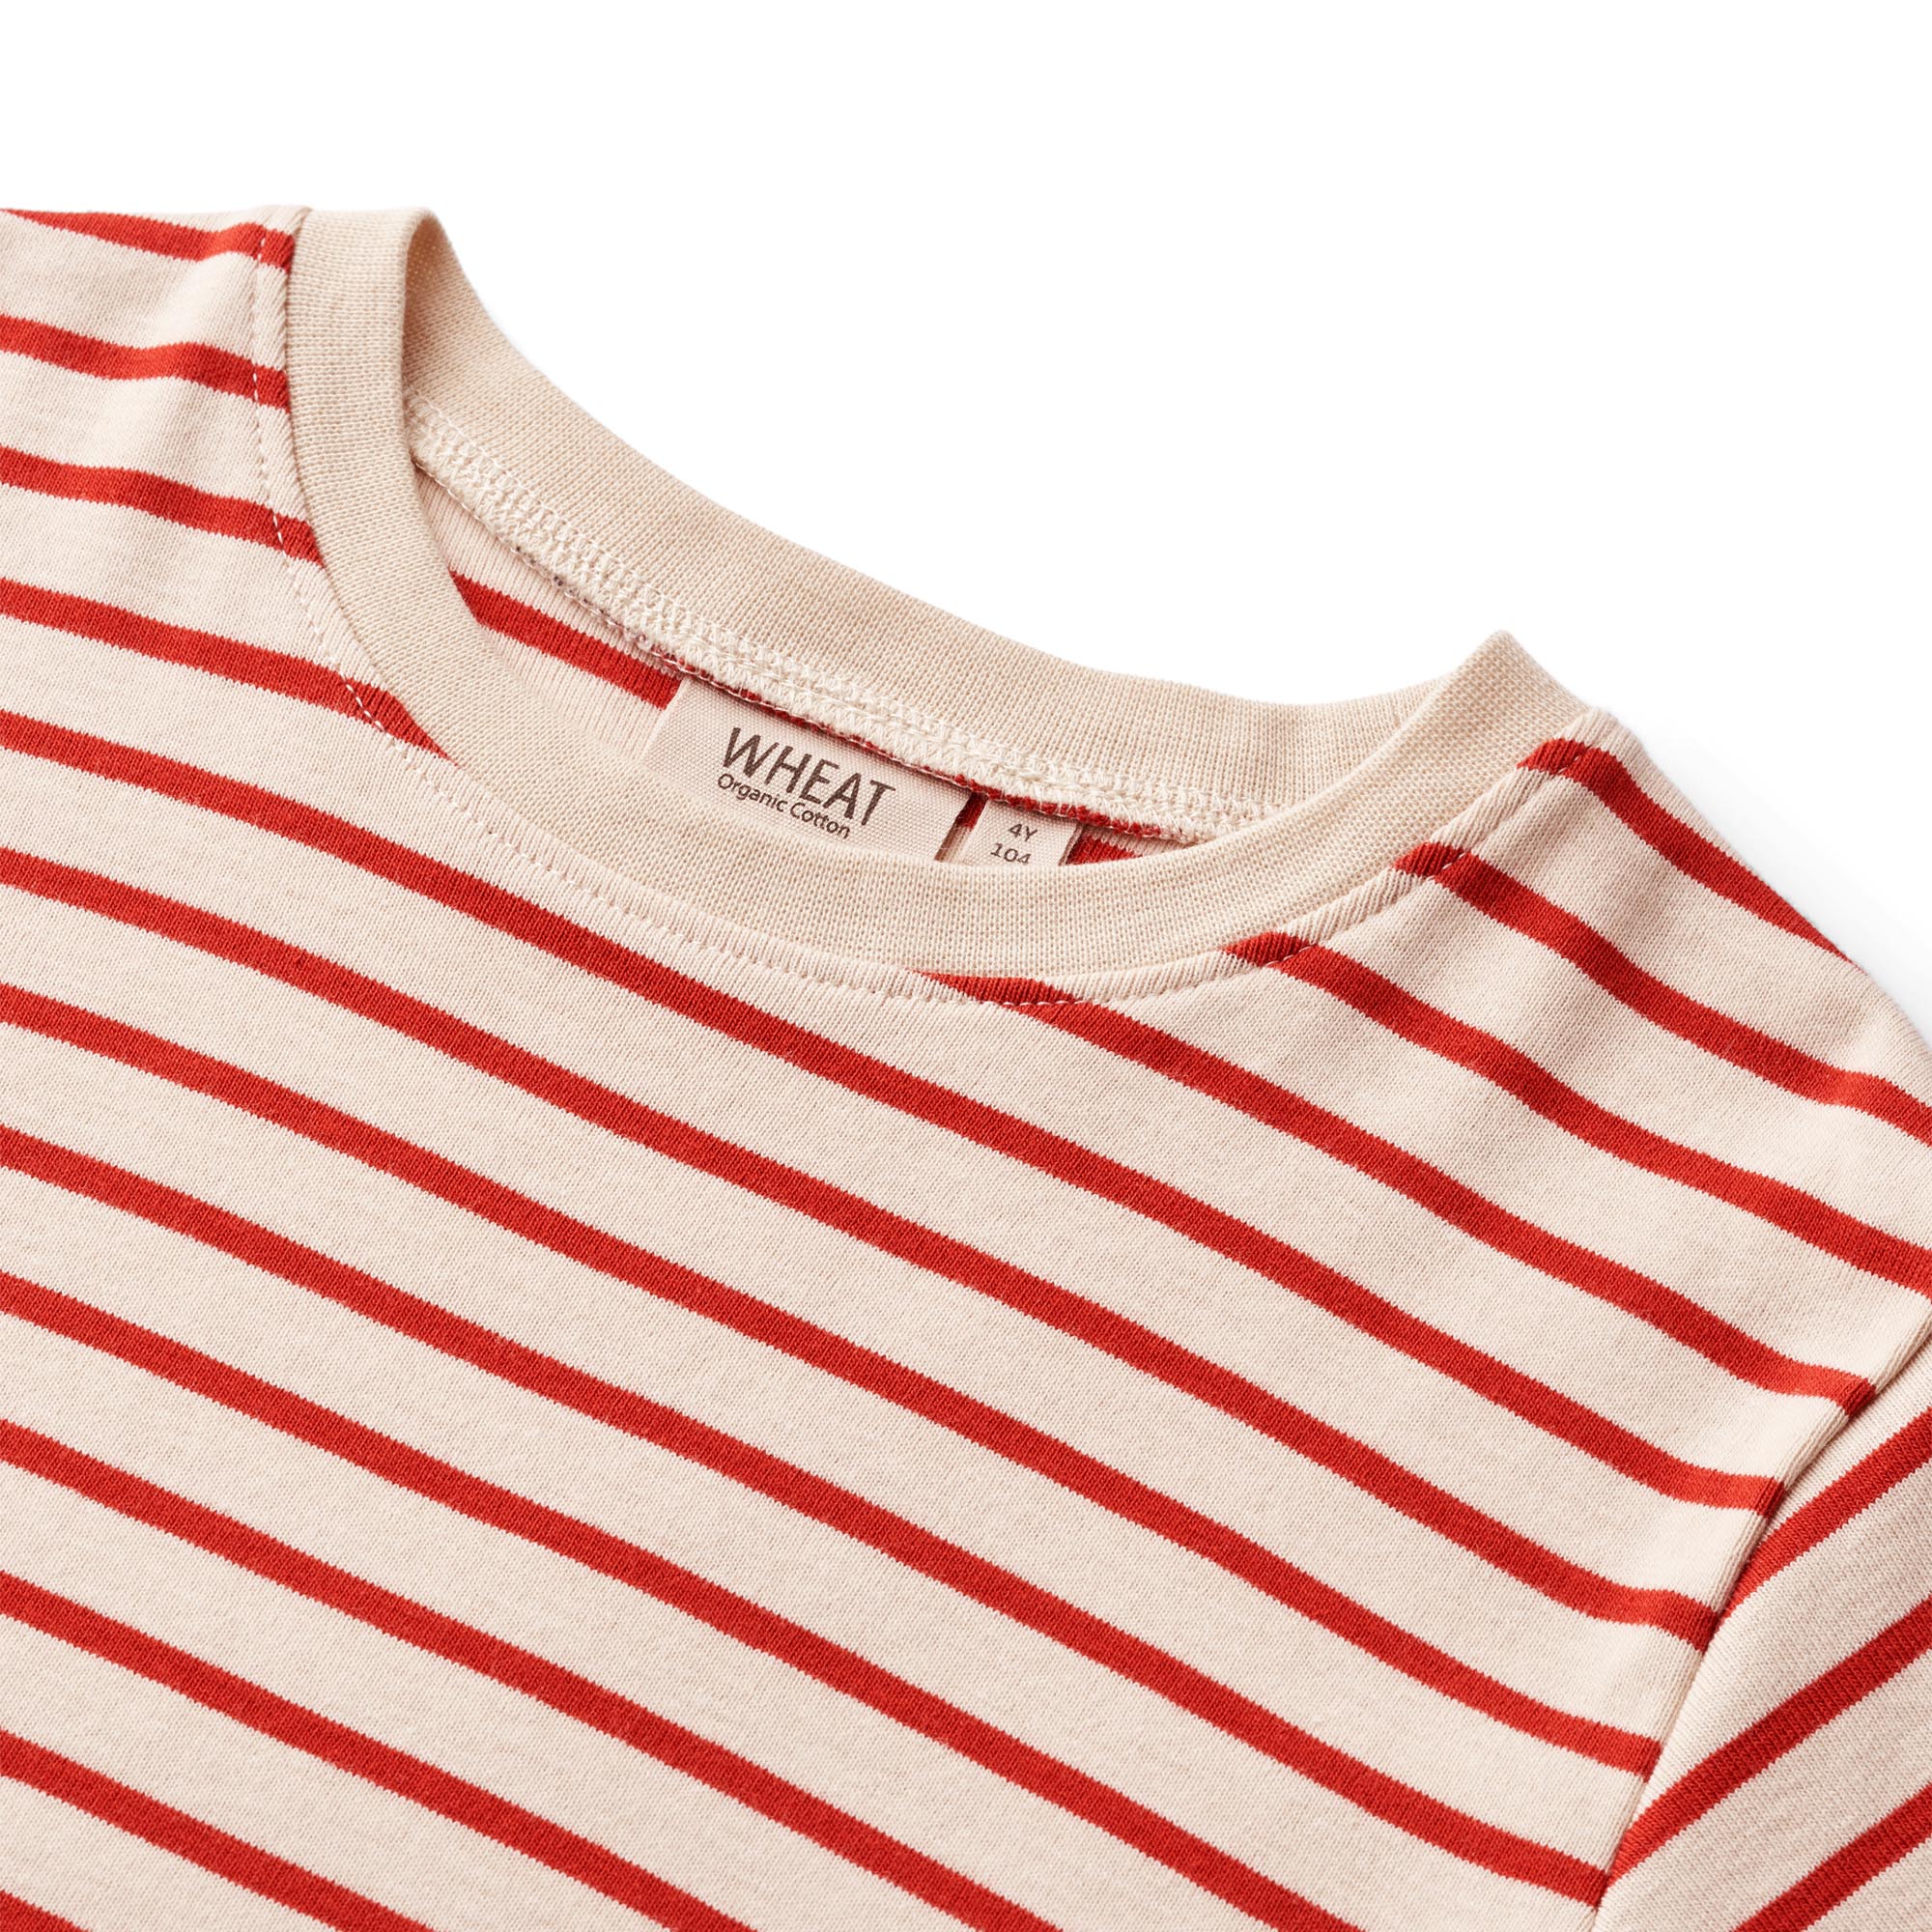 Jeff&Joy-Wheat-T-Shirt-Fabian-2078-red-stripe